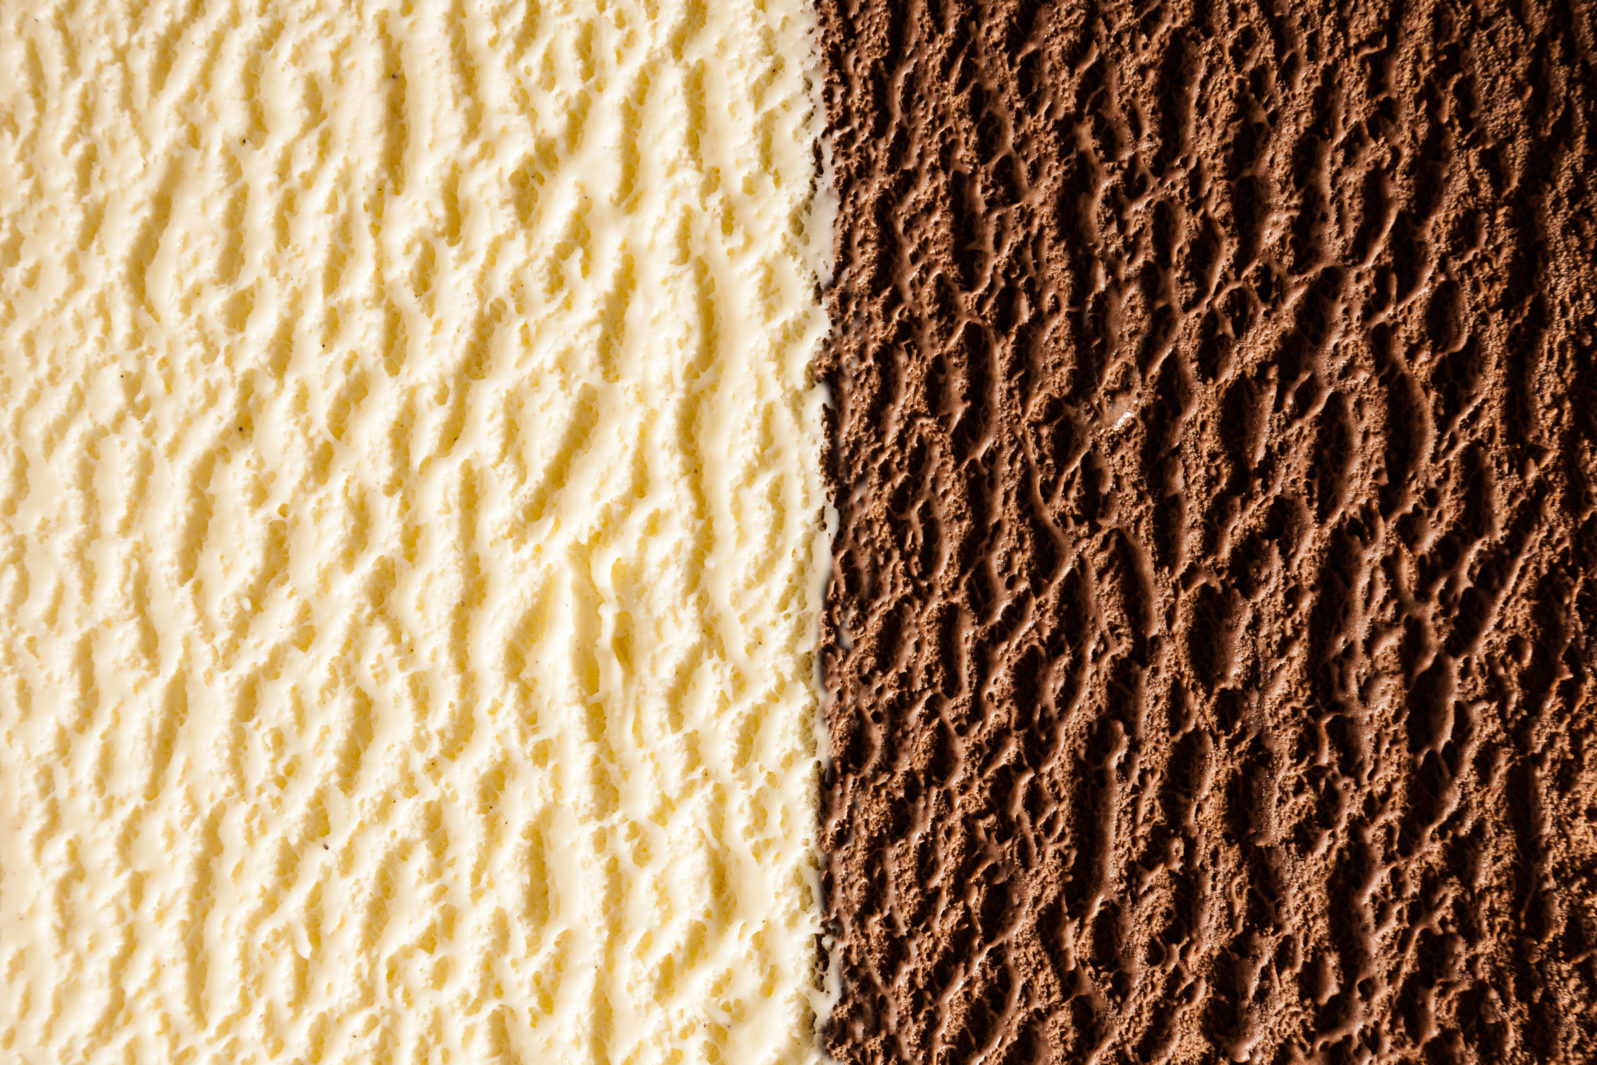 Chocolate and vanilla bourbon ice creams